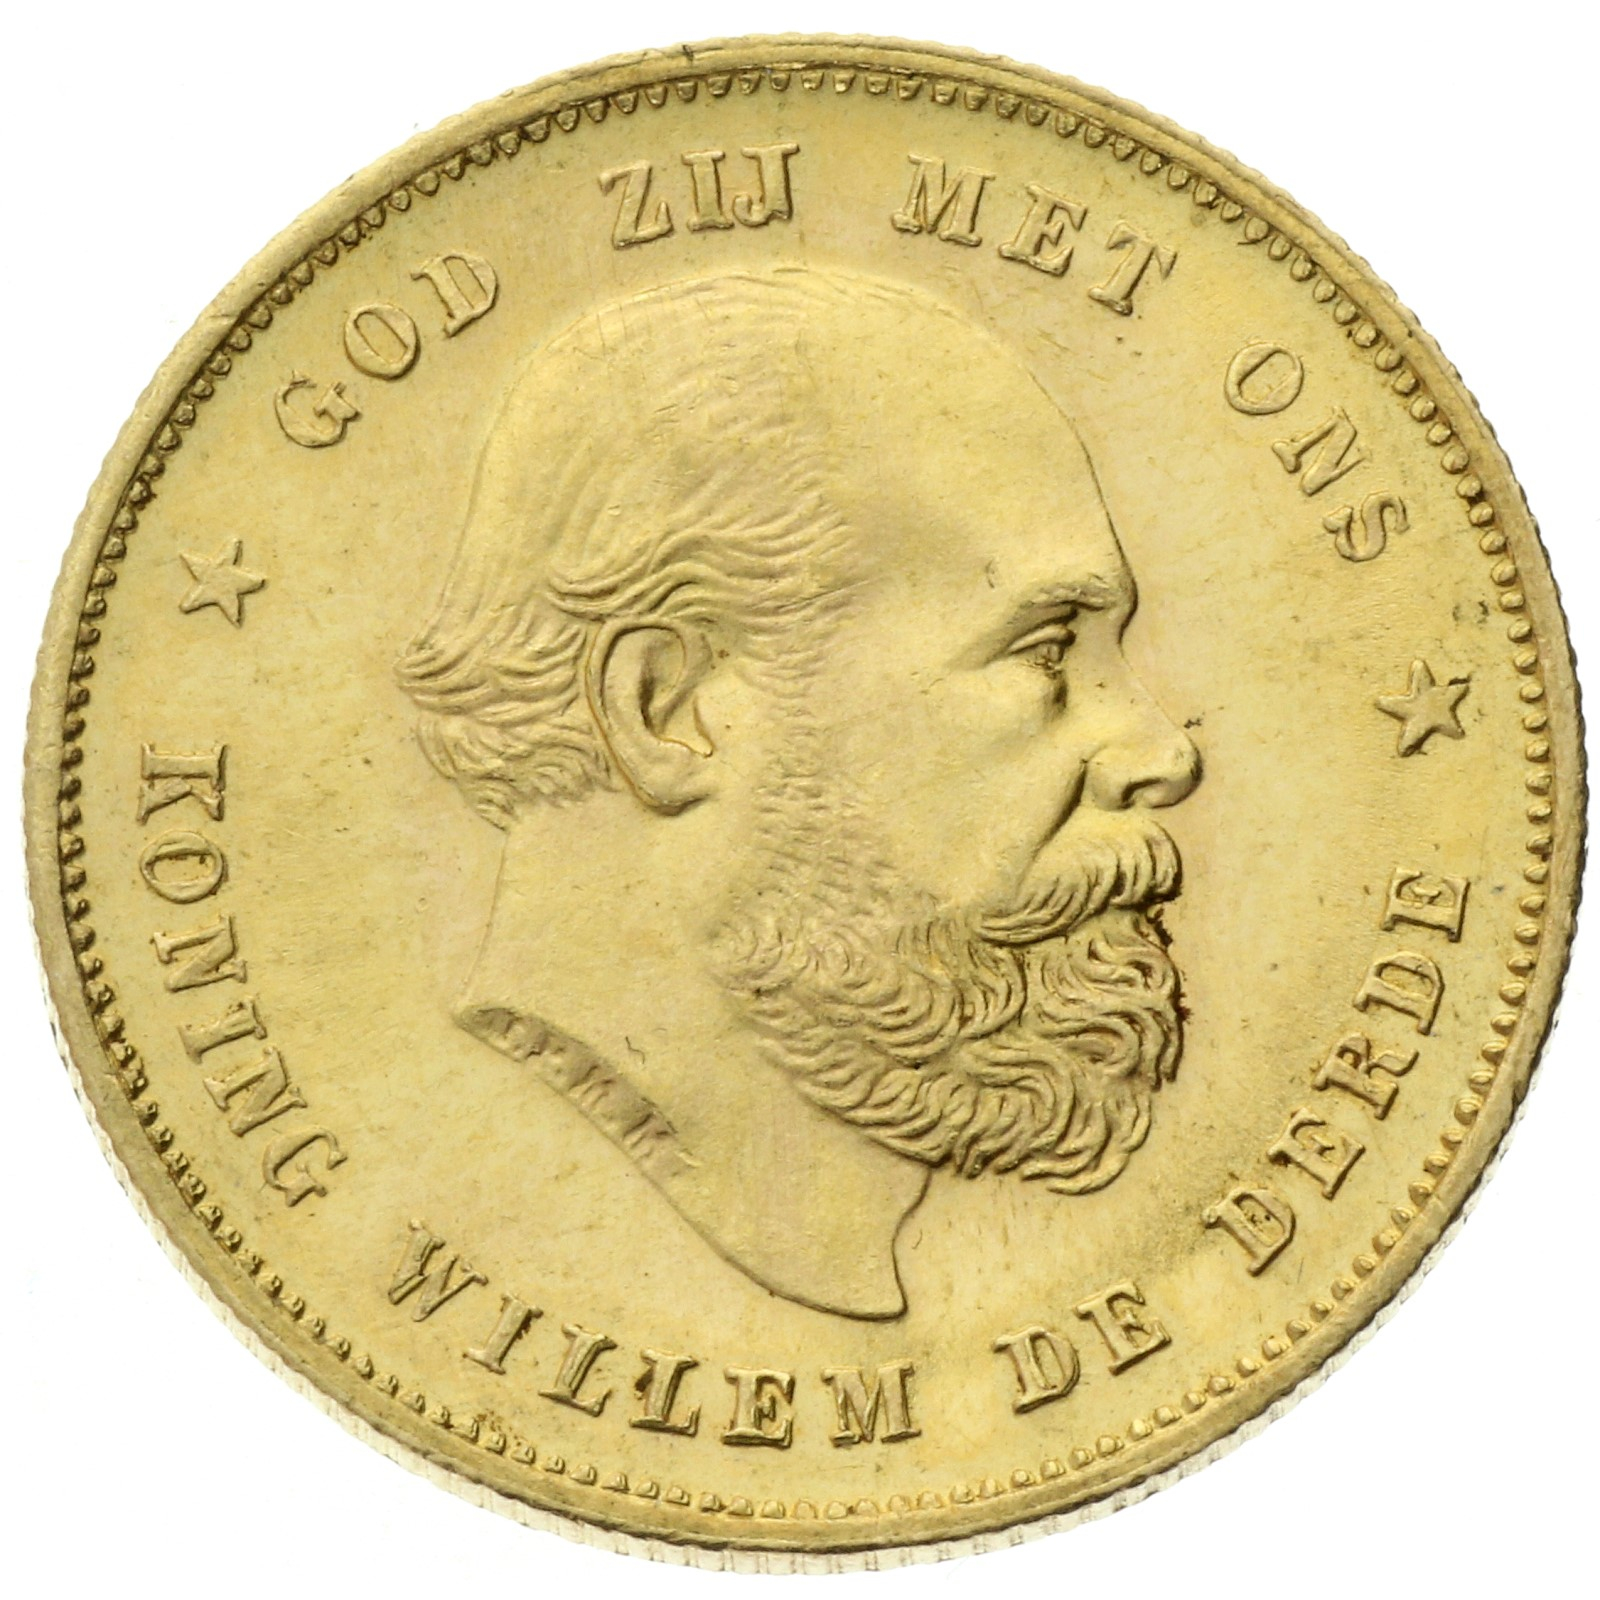 Netherlands - Willem III - 10 gulden - 1879 